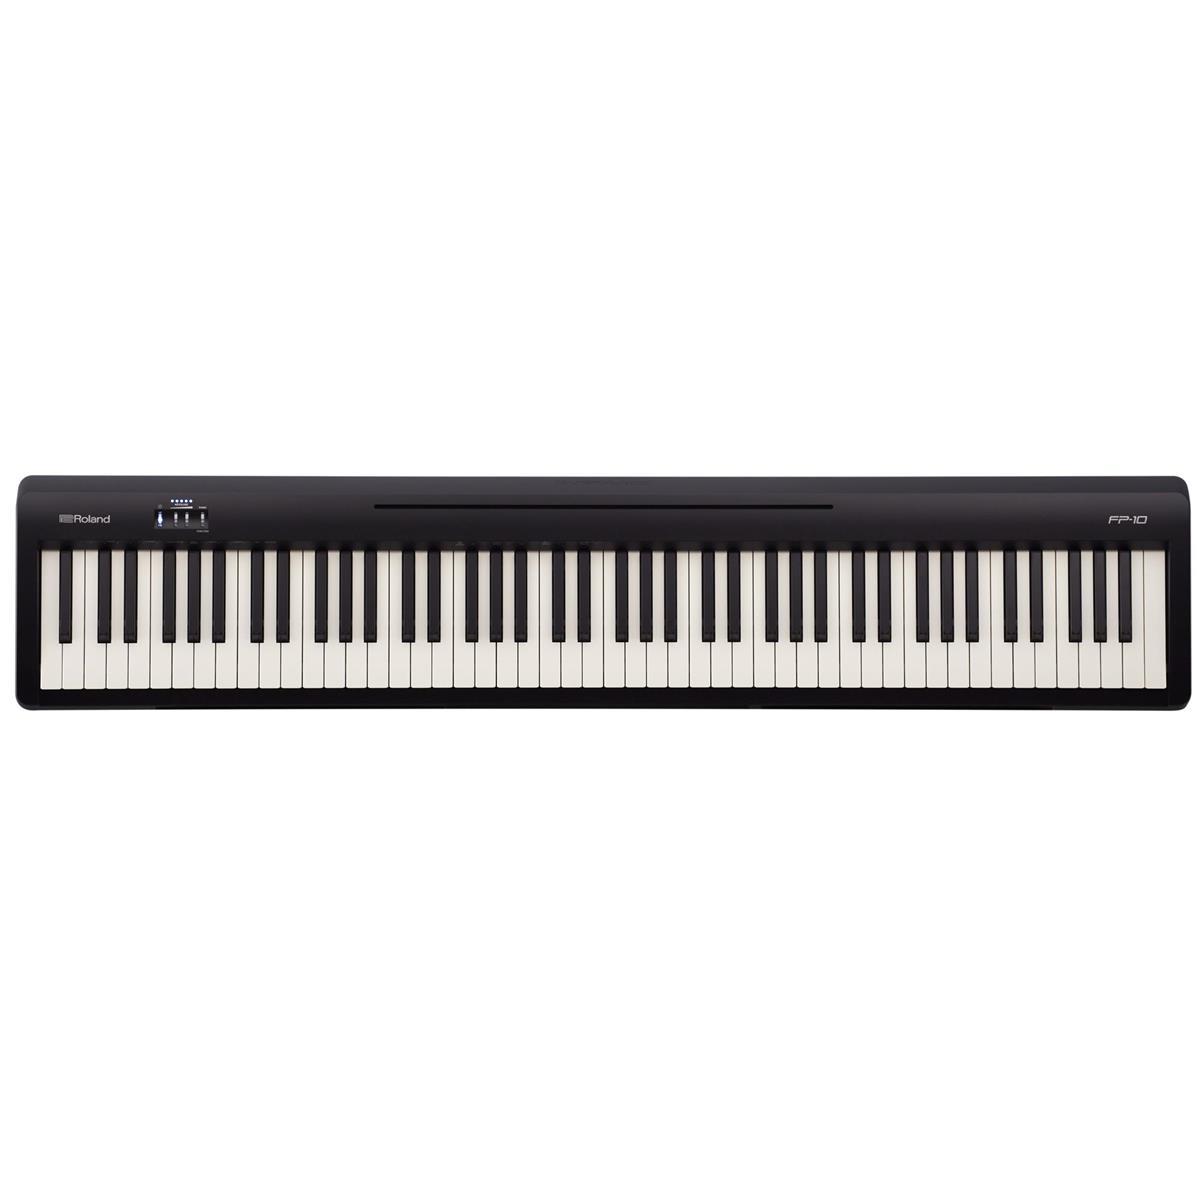 Roland FP-10 88-Key Digital Piano $479 + free s/h